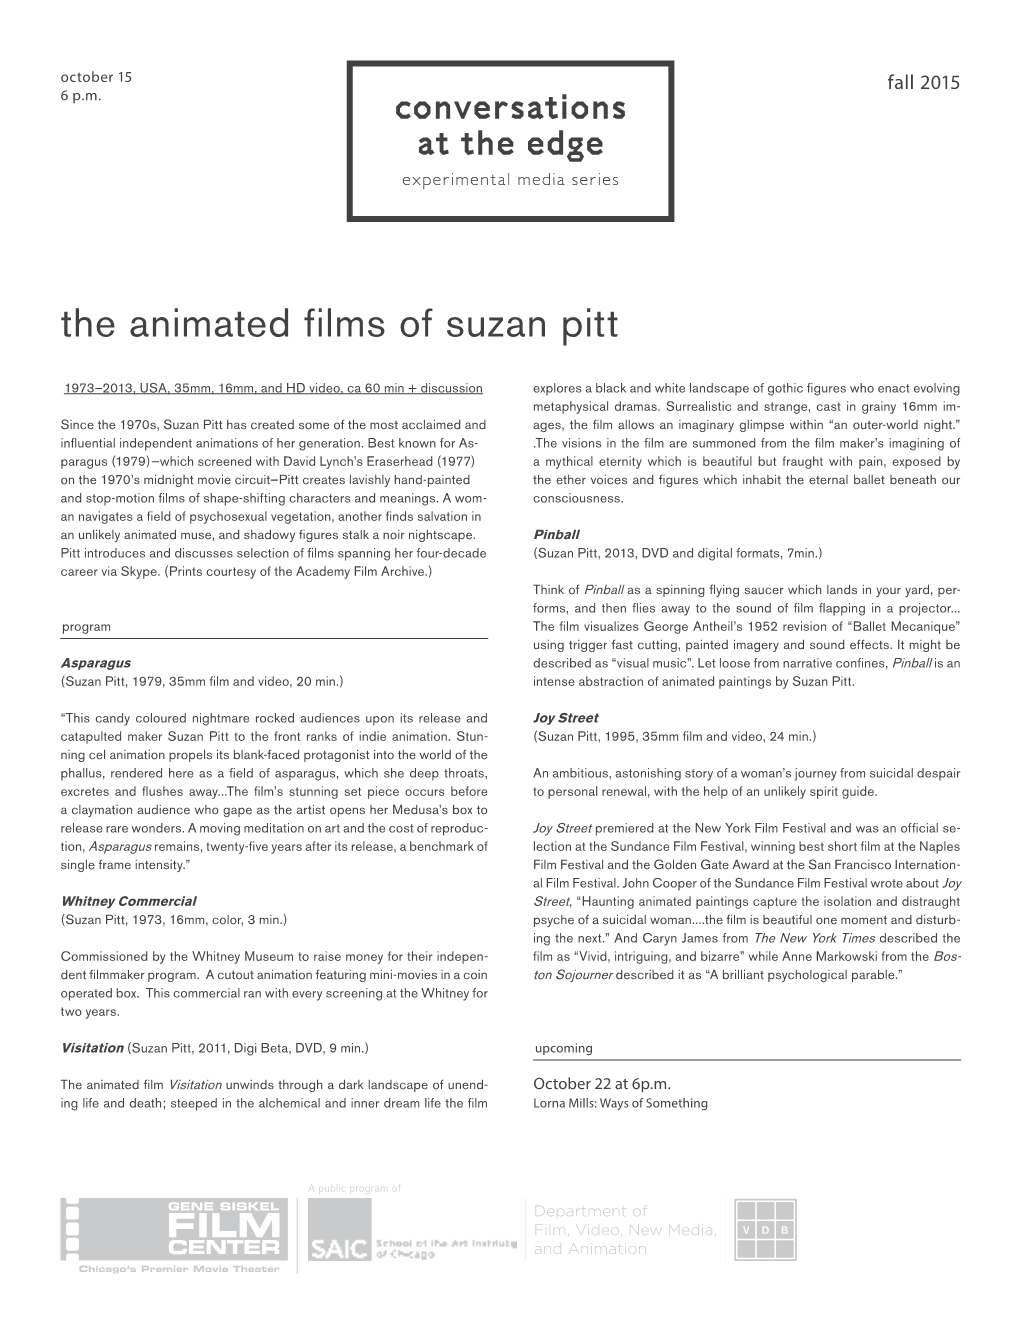 The Animated Films of Suzan Pitt